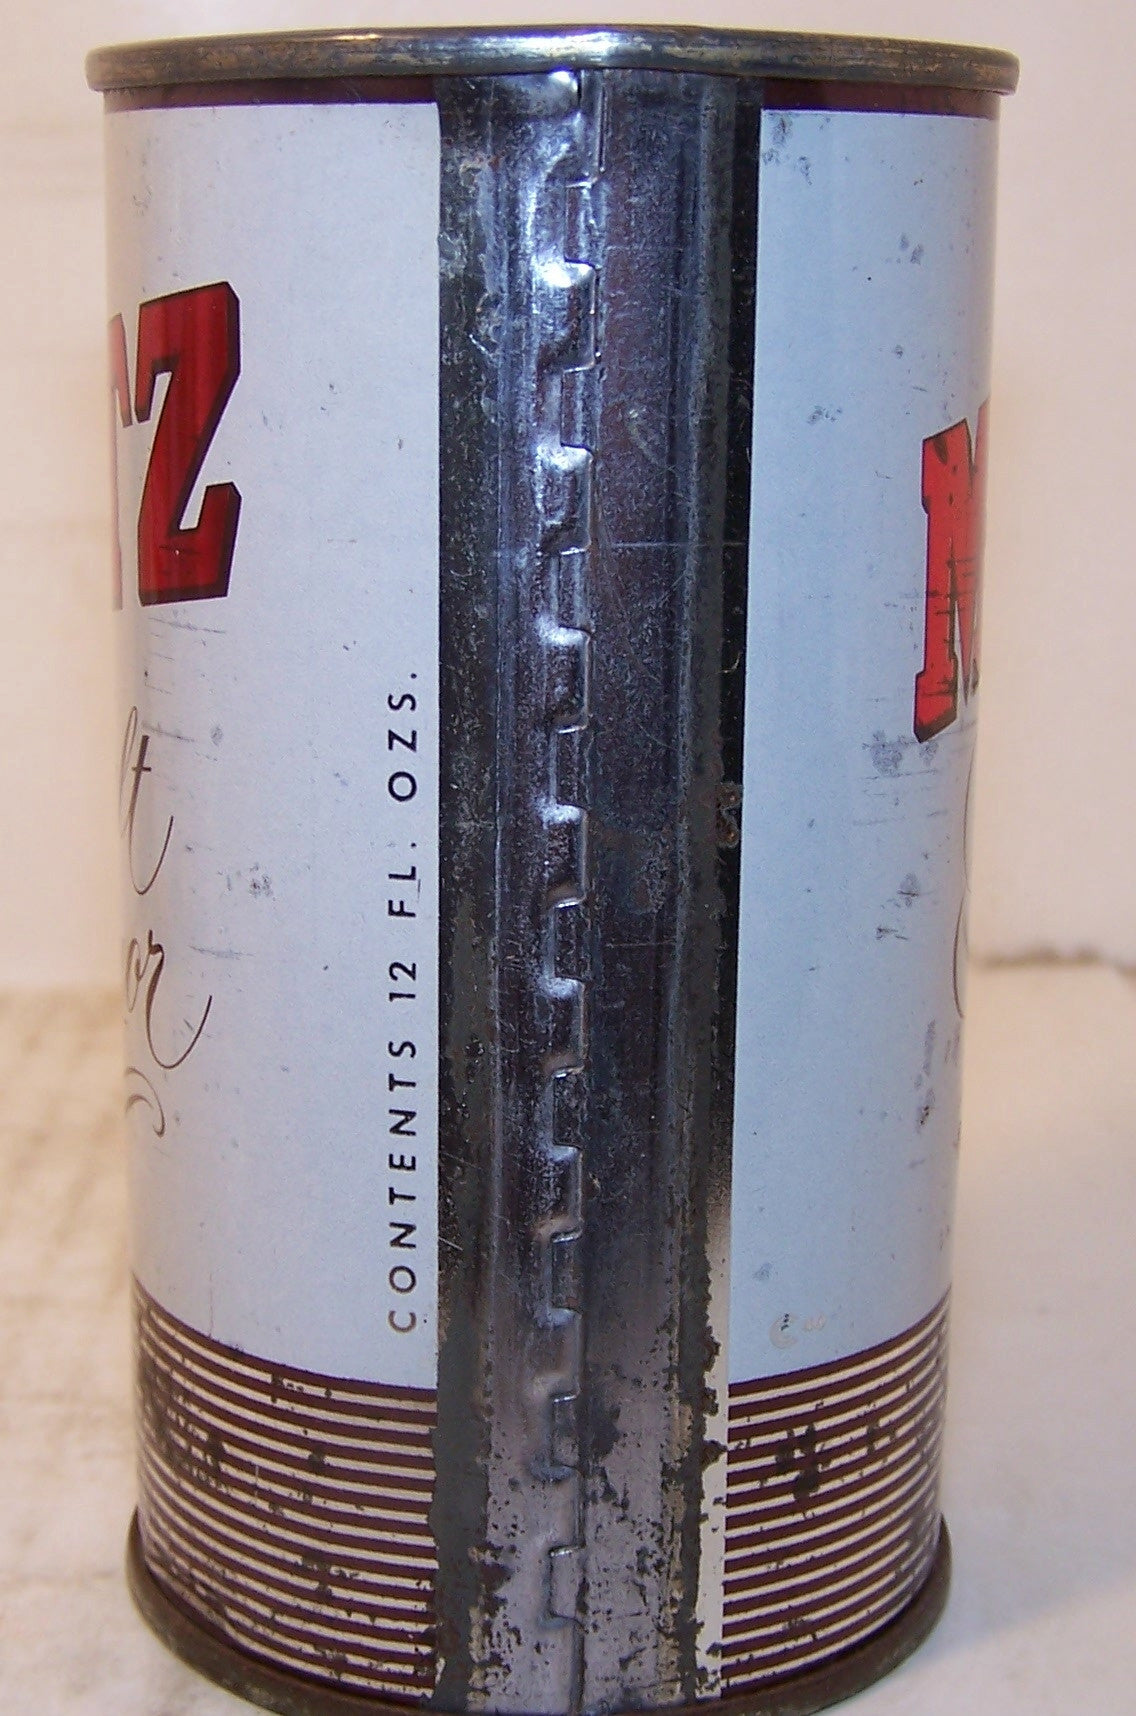 Metz Malt Liquor, USBC 99-22, Grade 1- Sold on 2/10/15